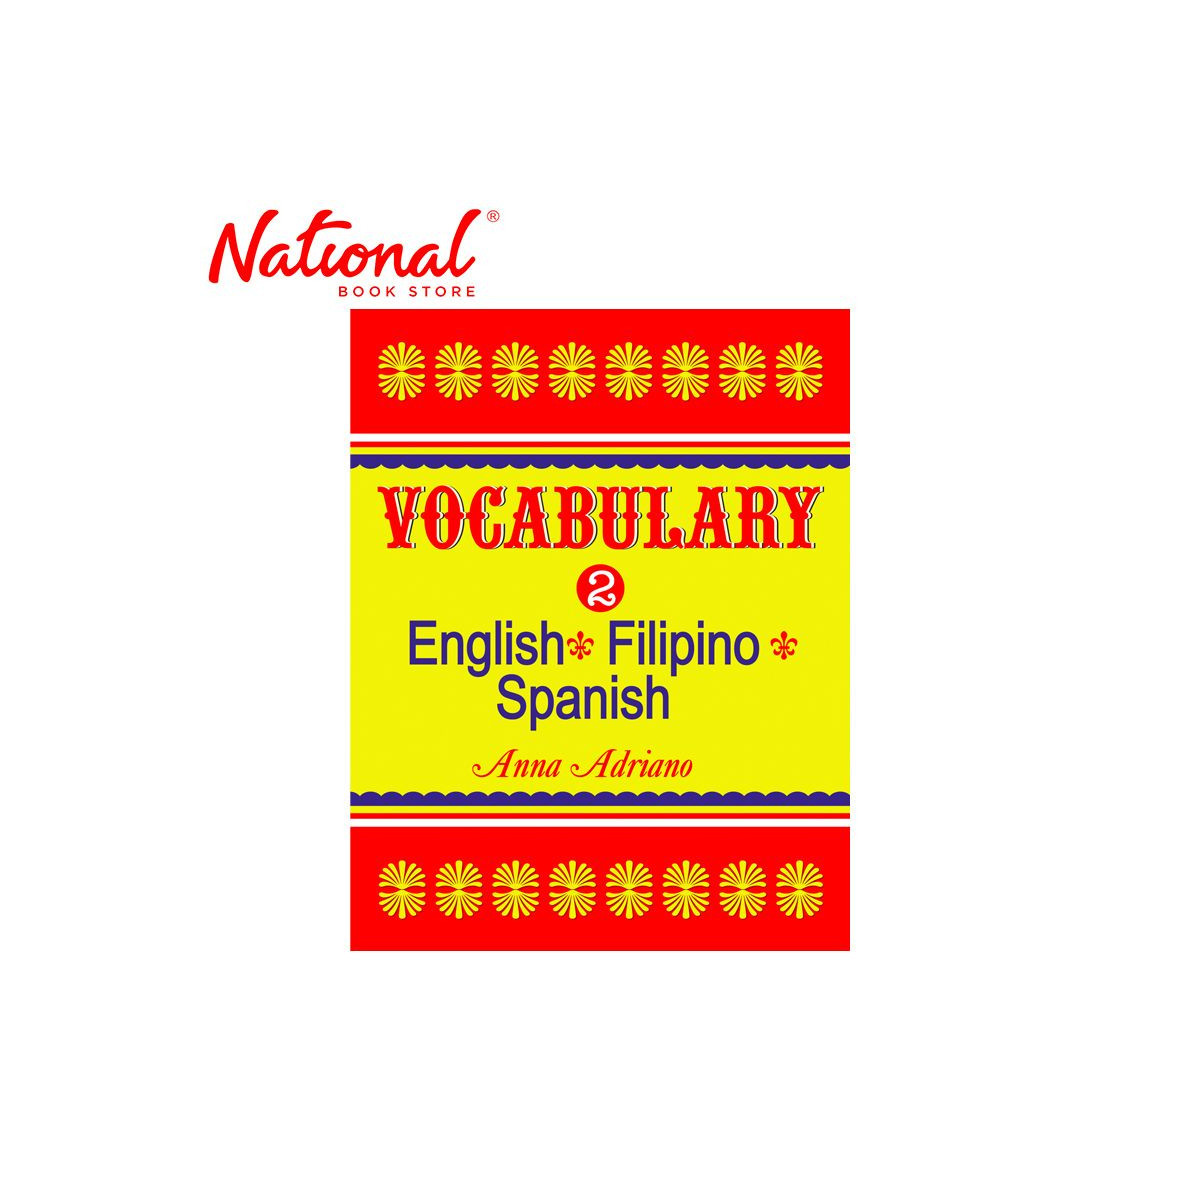 Vocabulary 2 English-Filipino-Spanish Trade Paperback by Anna Adriano - Reference Books